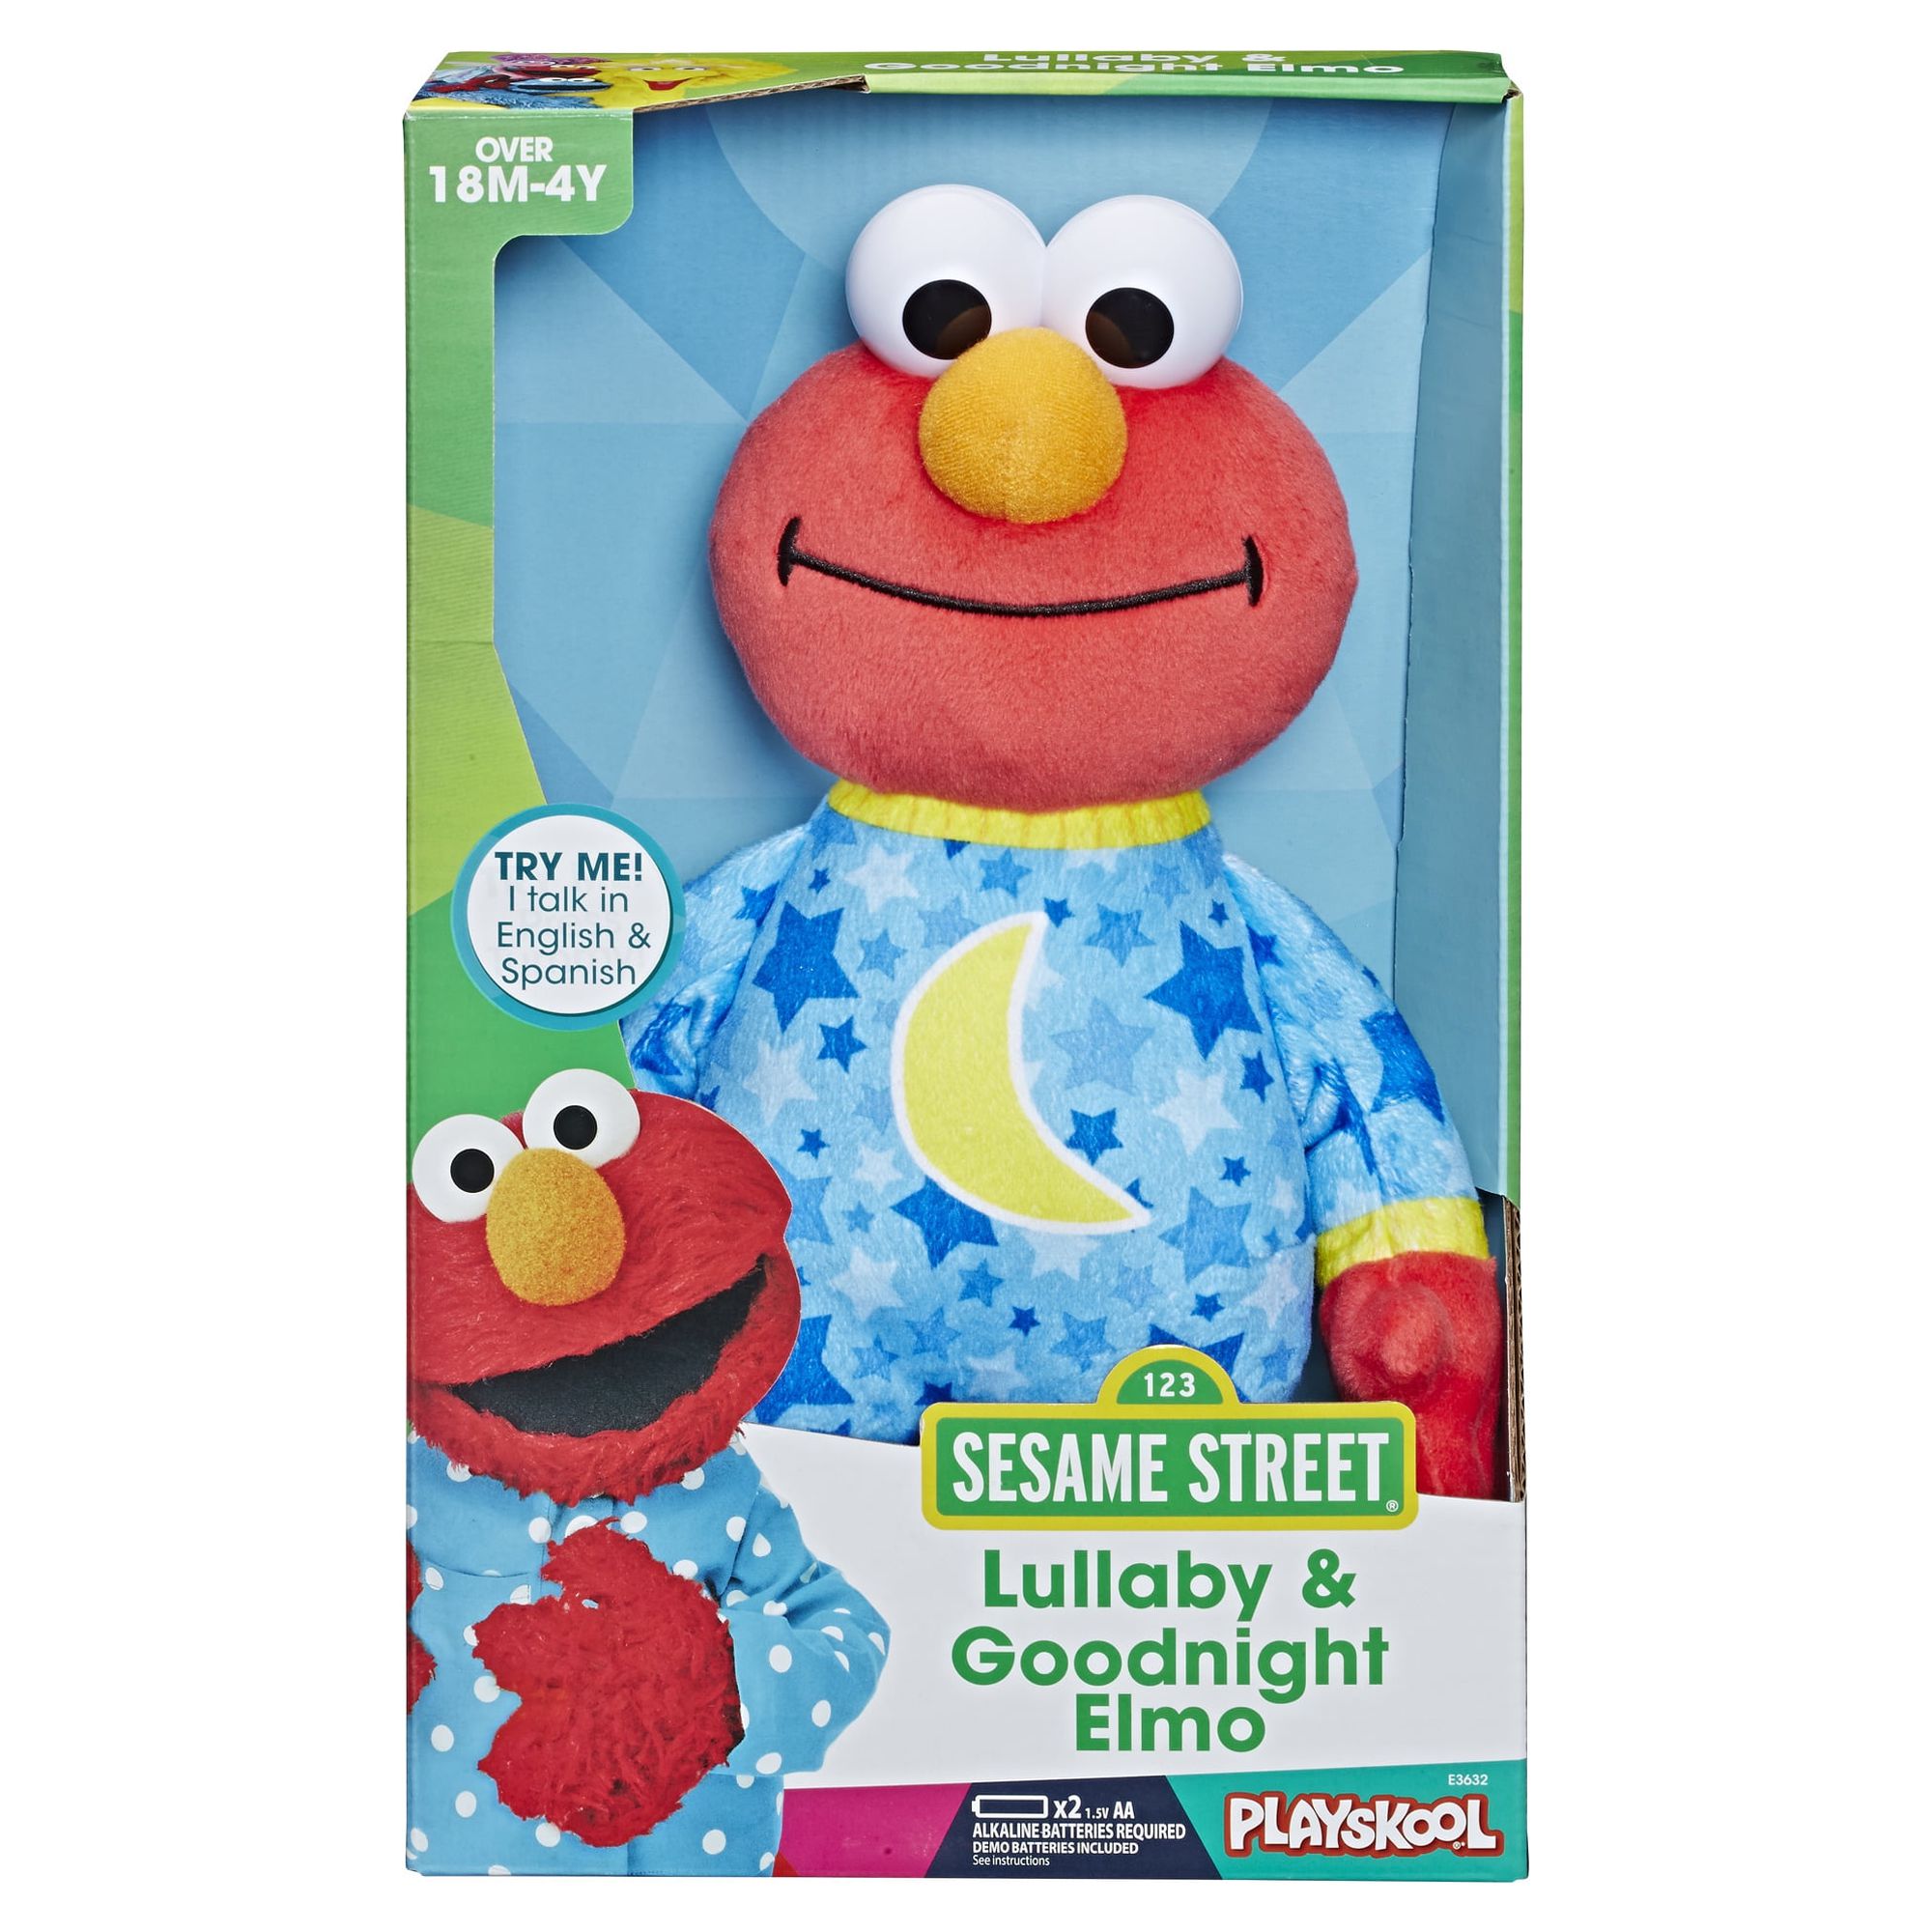 Sesame Street 12.99" Playskool Lullaby & Good Night Elmo Plush Toy - image 5 of 7